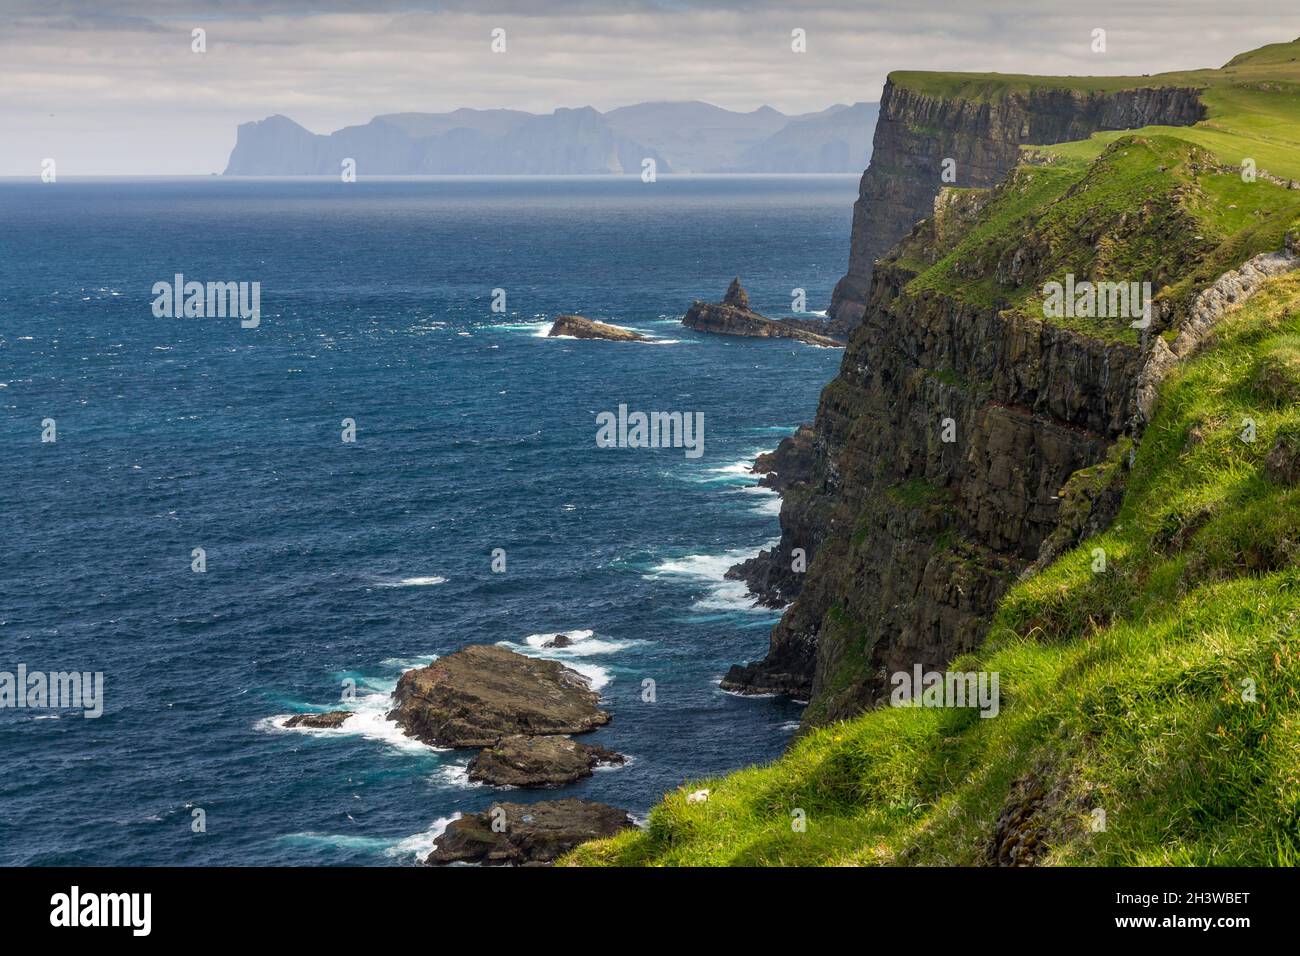 Cliff of the Mykines island Stock Photo